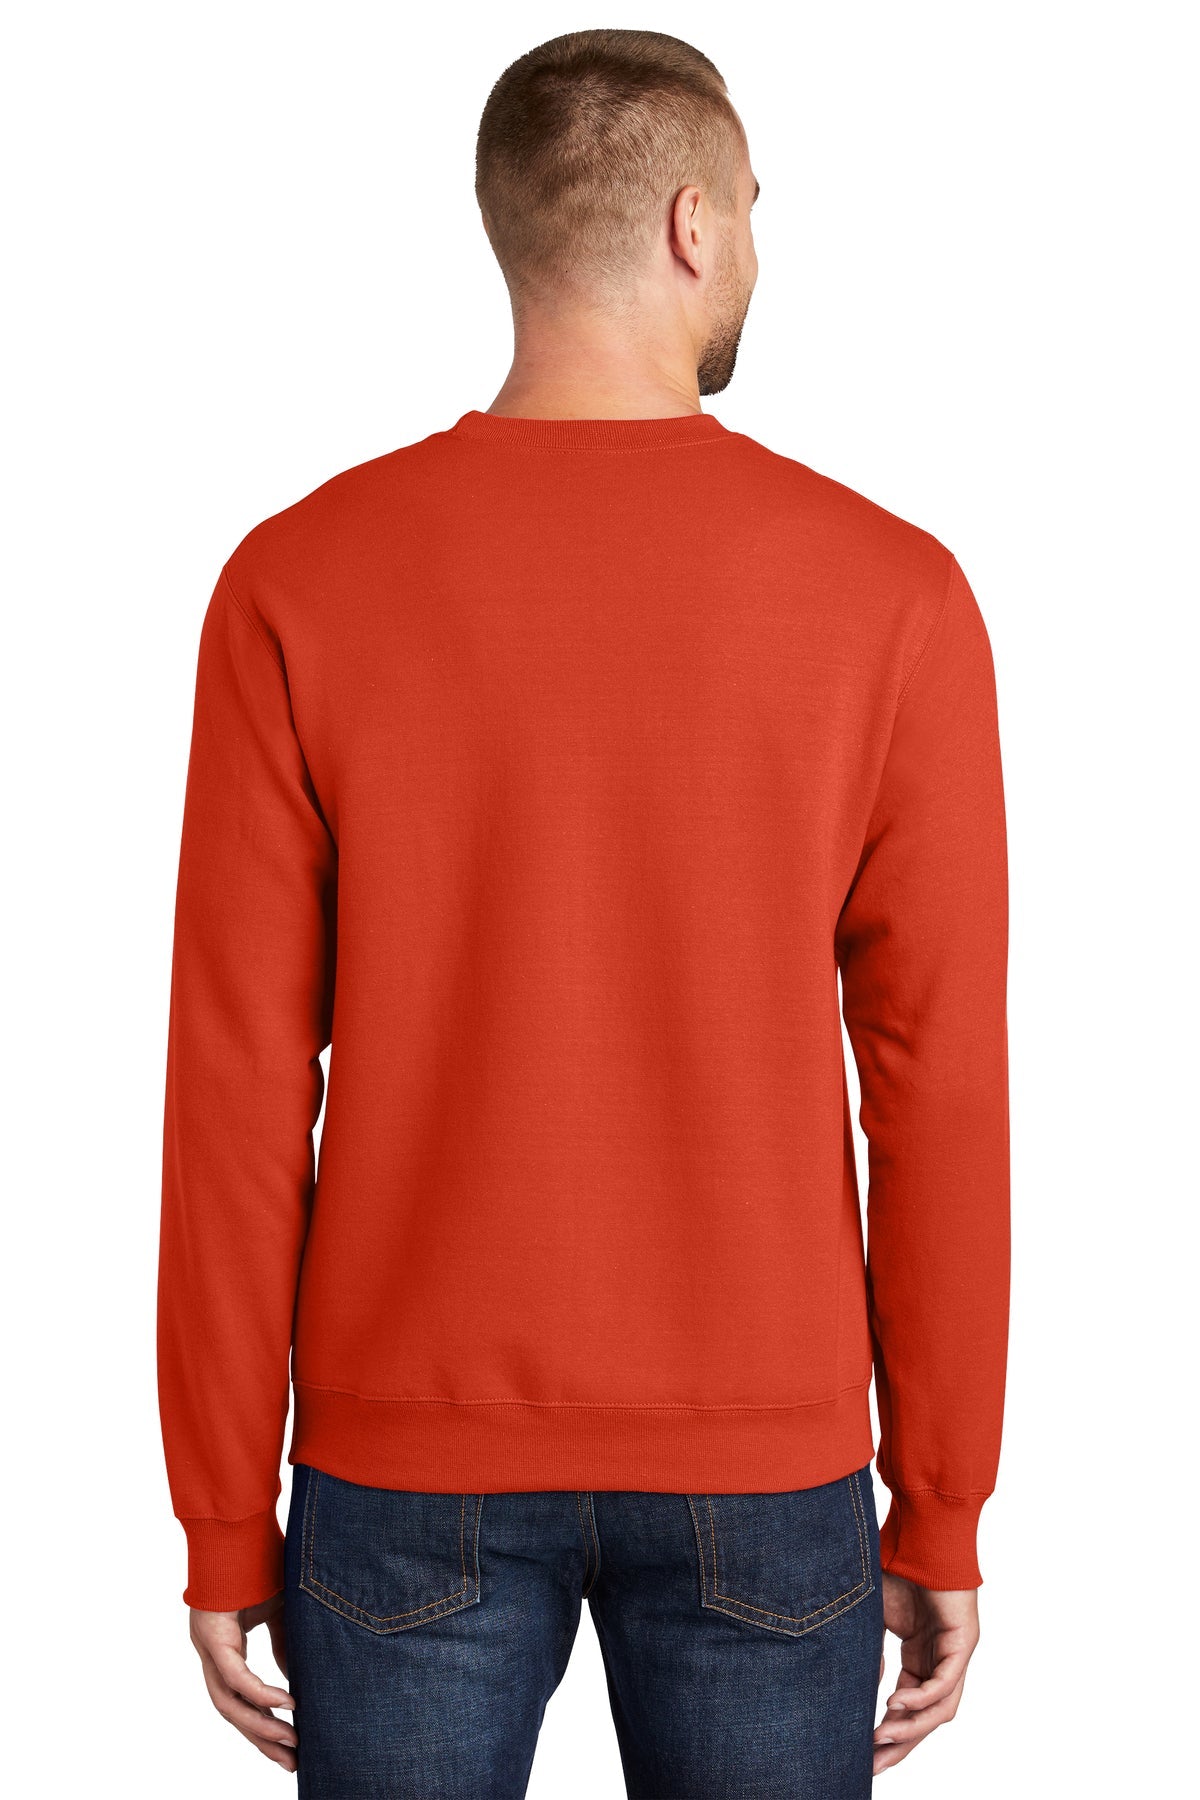 port & company_pc90 _orange_company_logo_sweatshirts